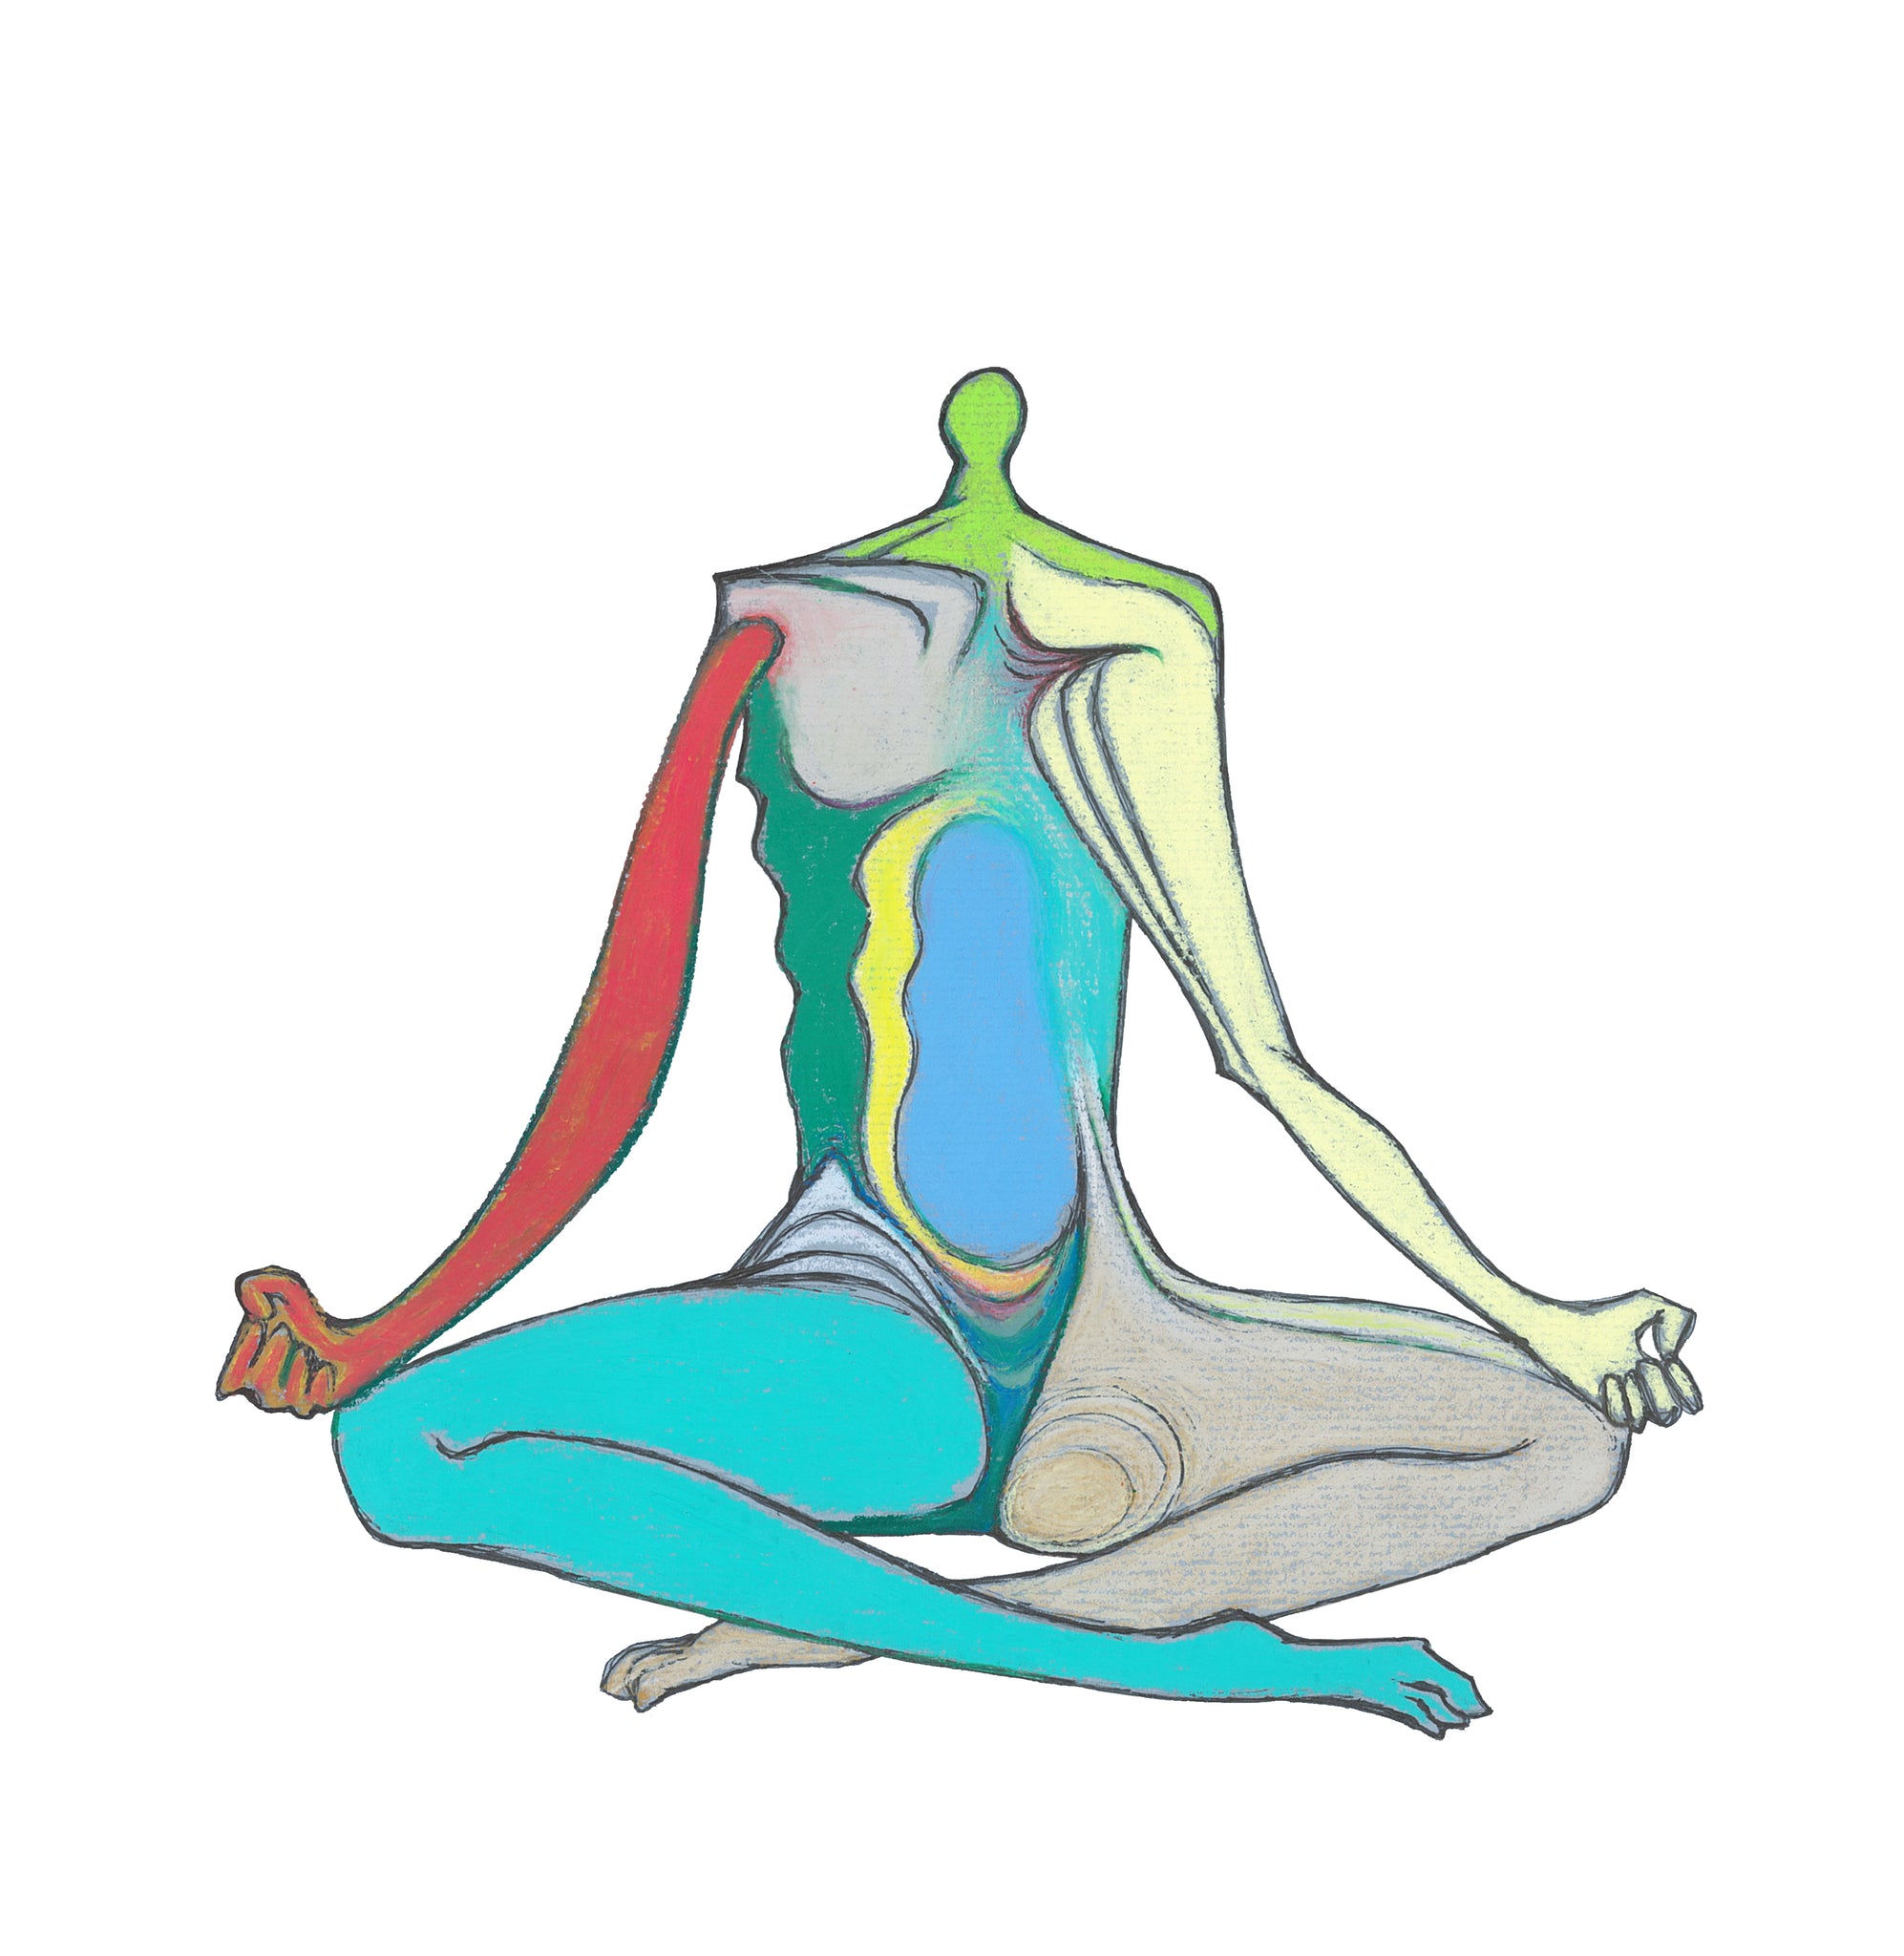 Art Print. Graphikasana, Relaxing pose, Full Lotus pose (Padmasana) Art by Yolyanko